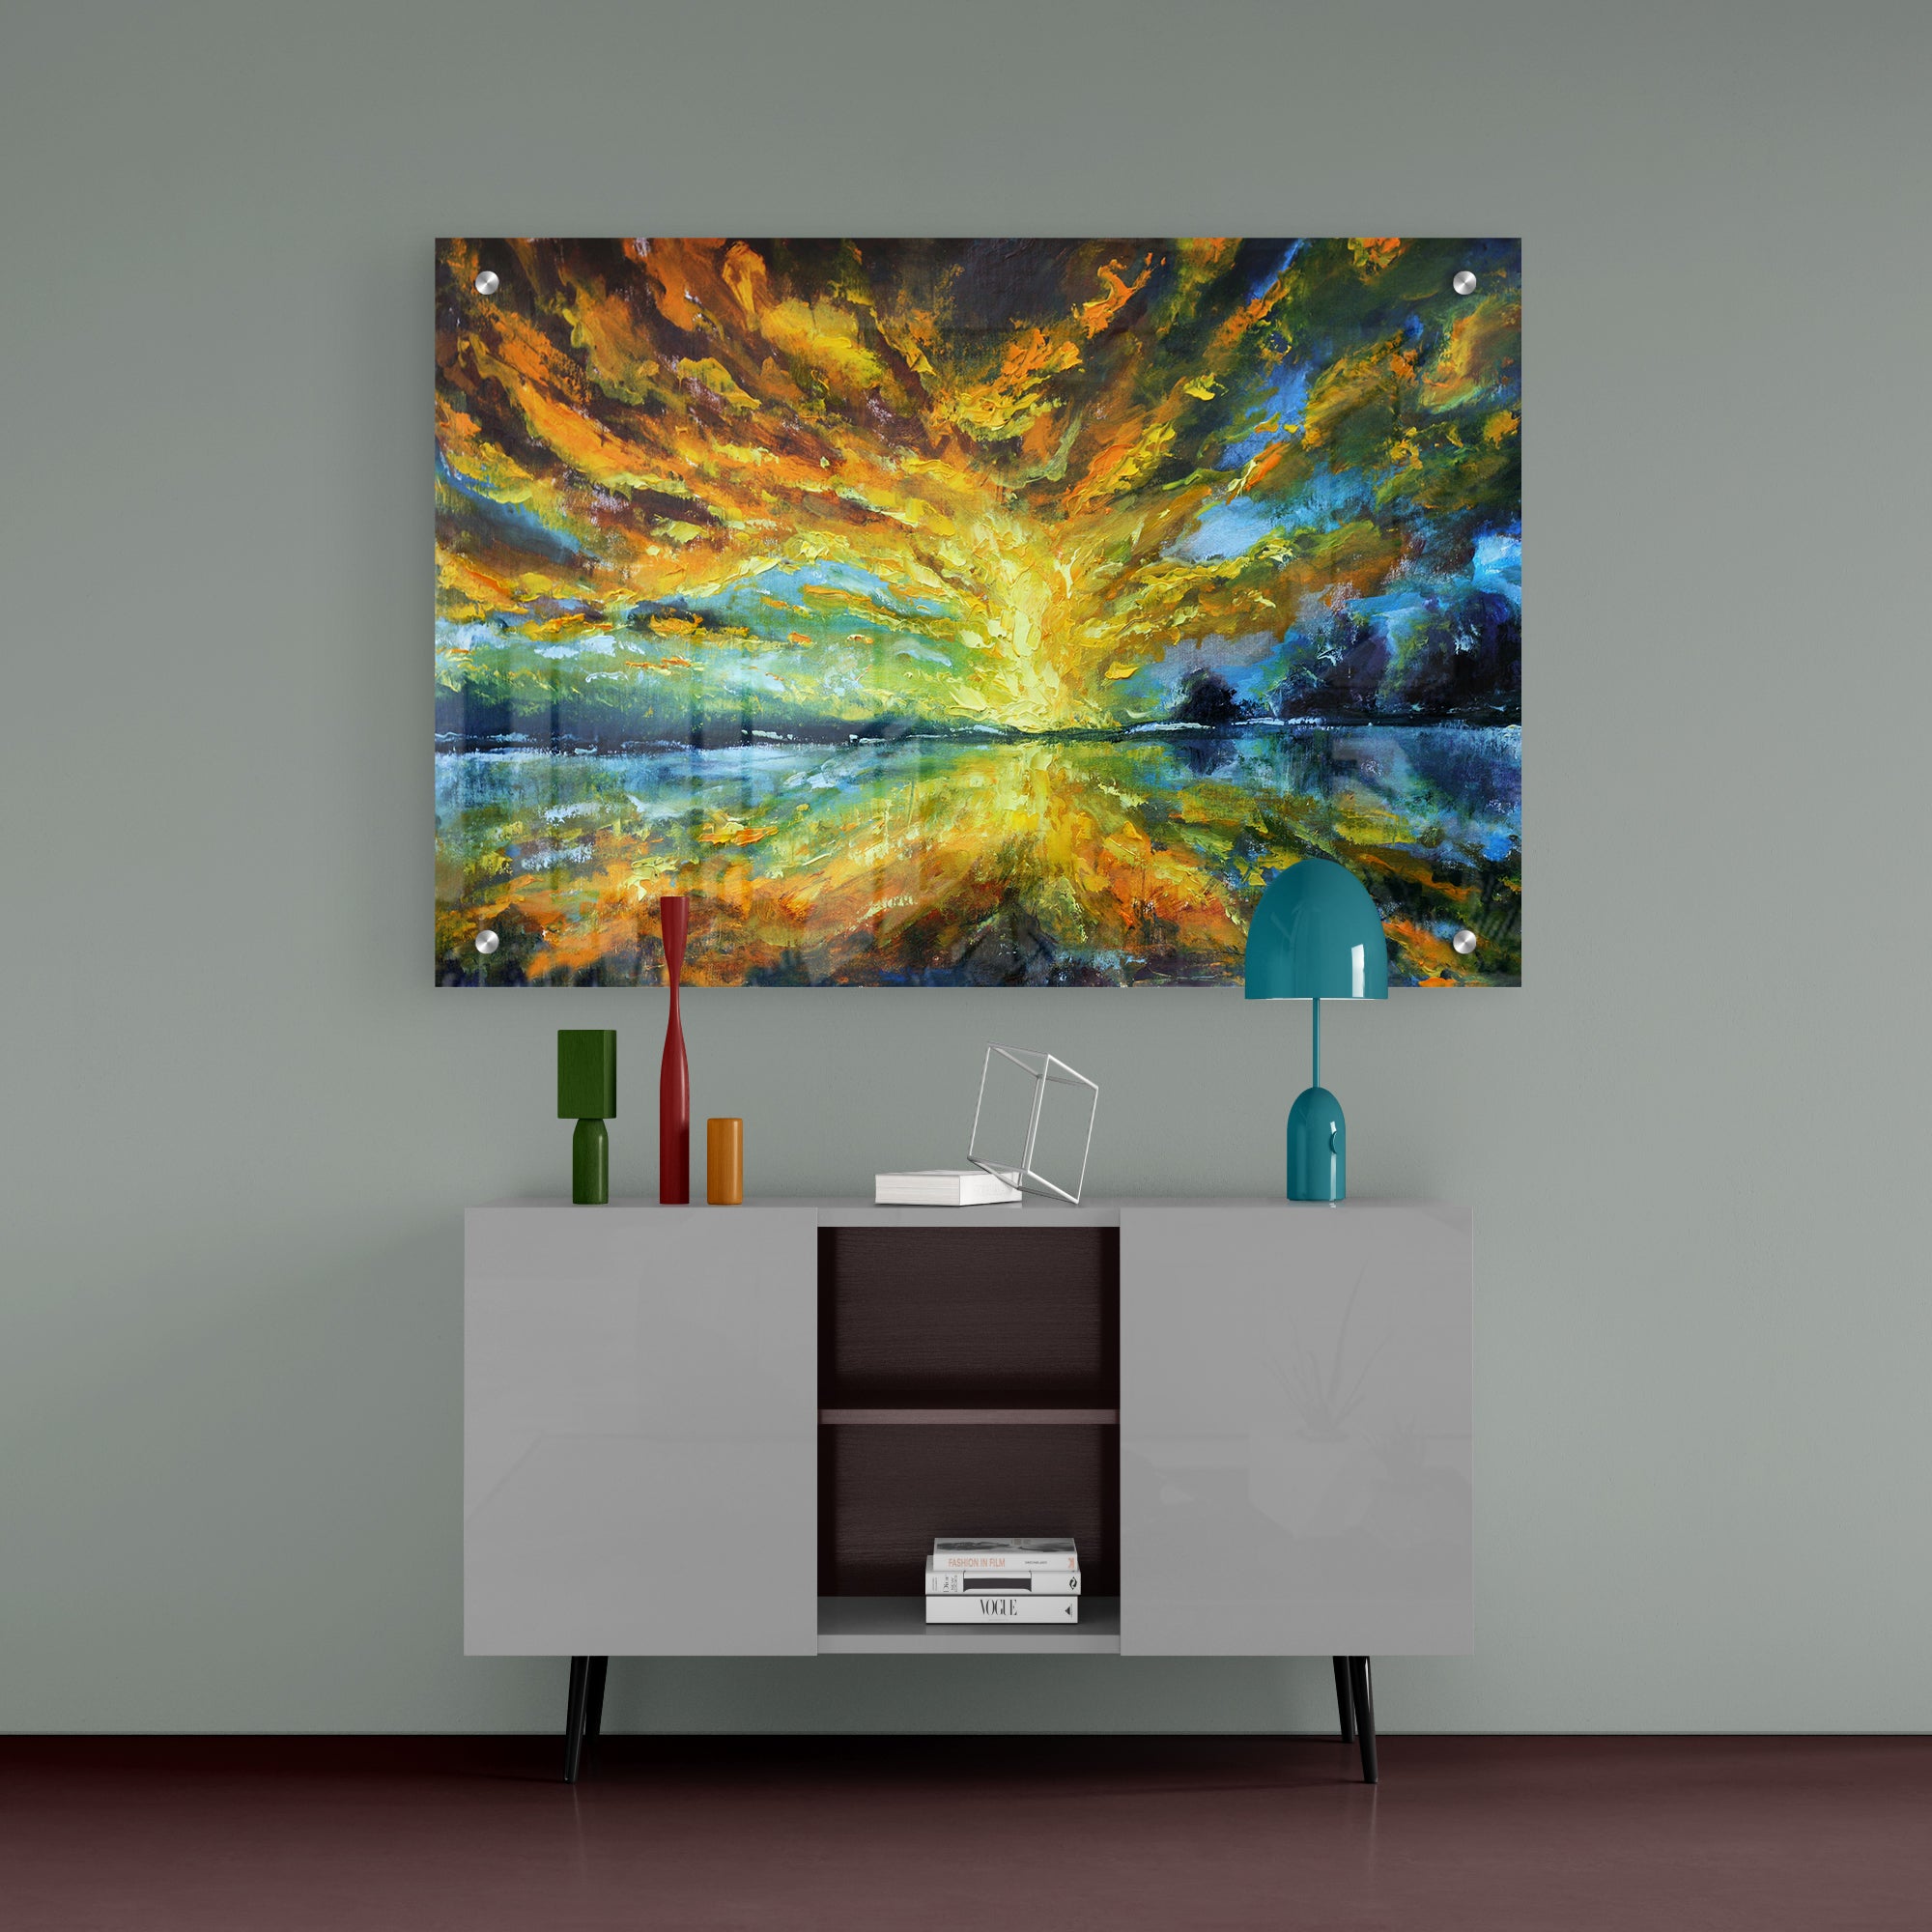 Mystic Sunset Abstract Art Premium Acrylic Wall Painting